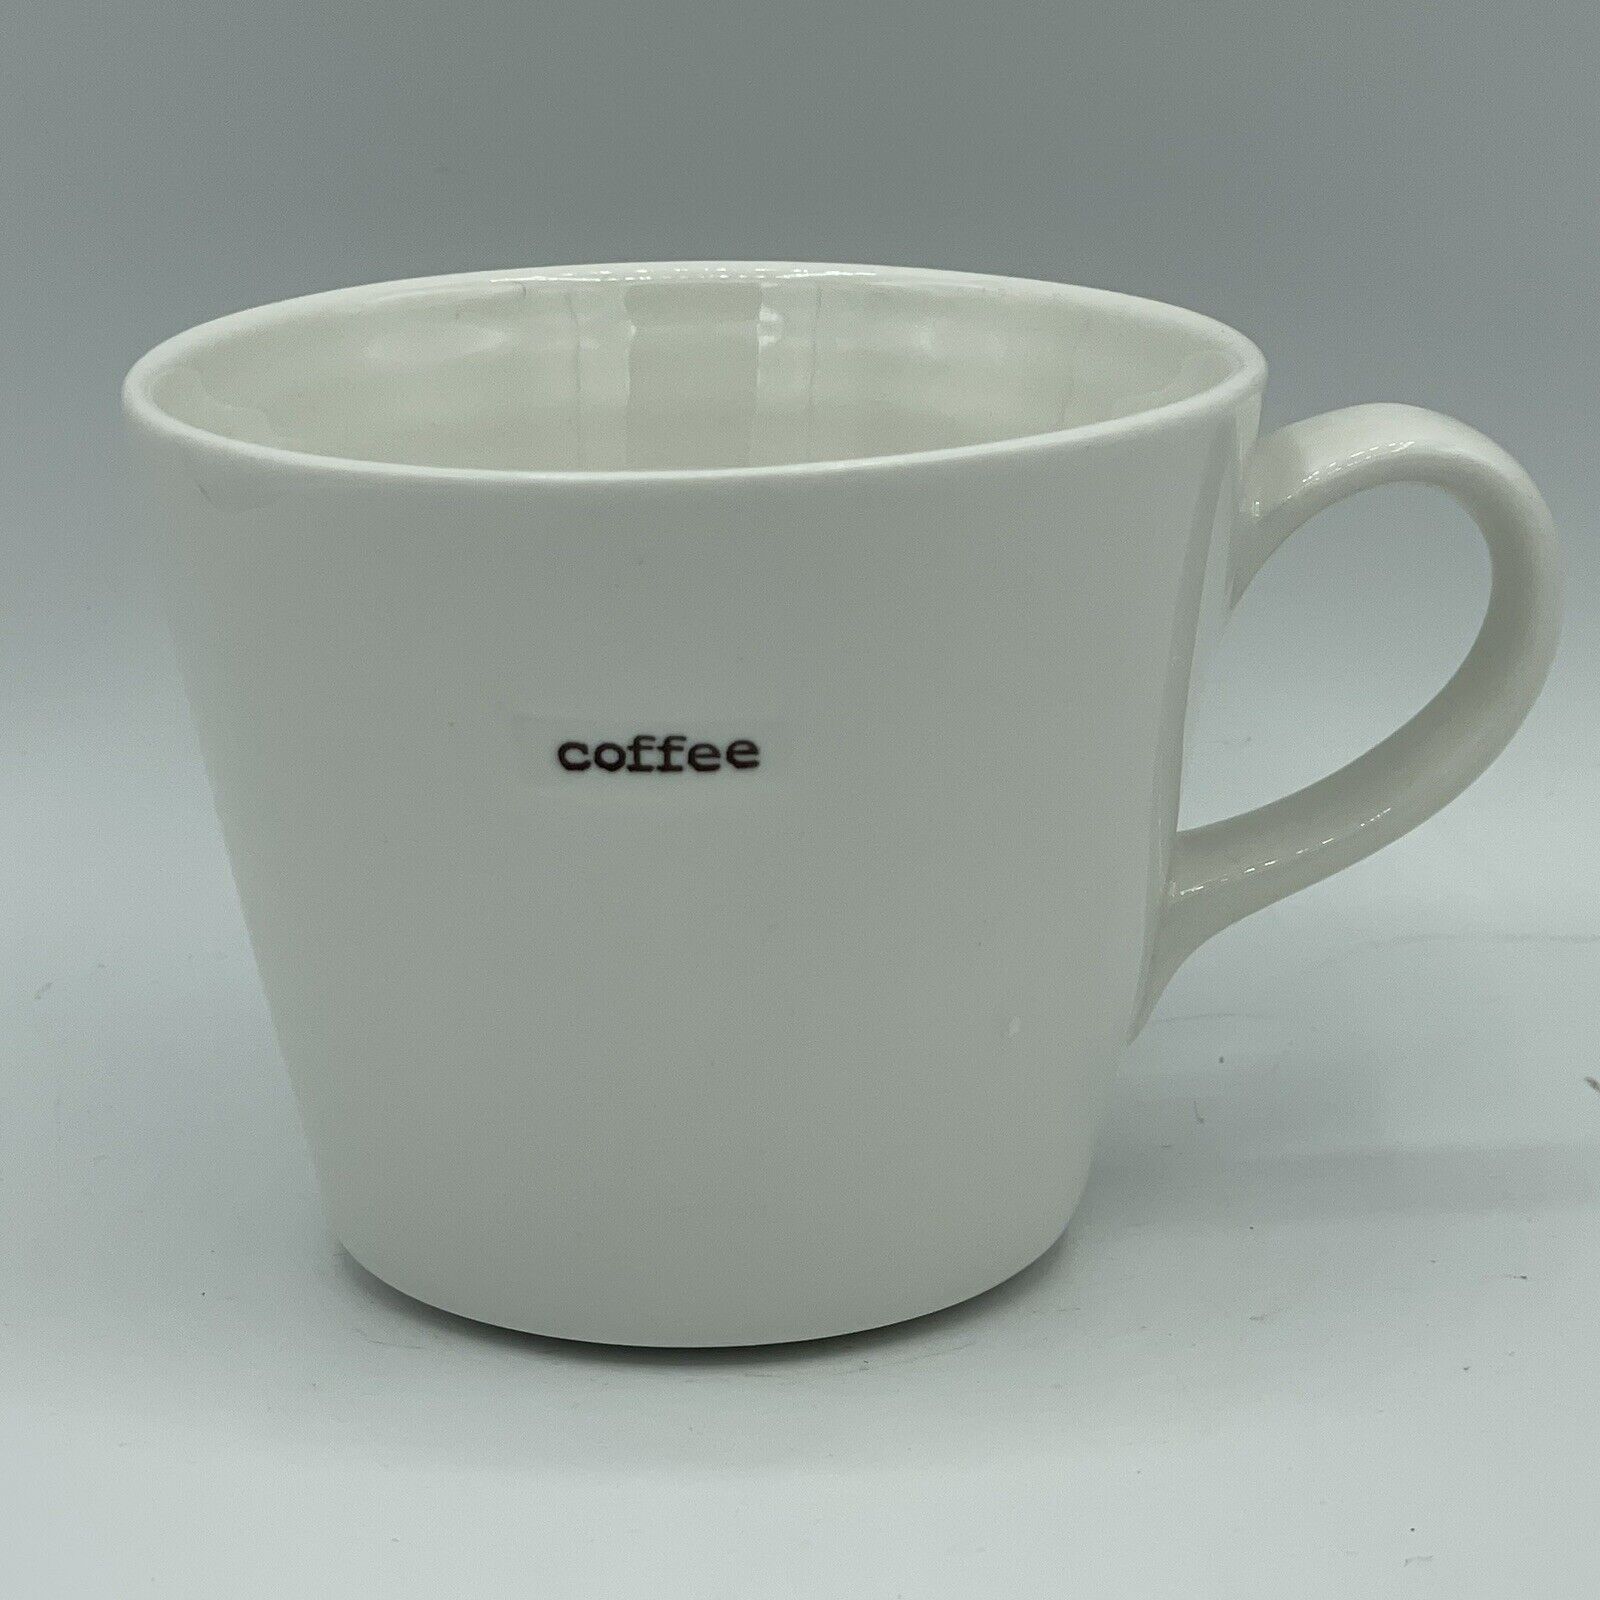 Keith Brymer Jones studio pottery mug coffee cup “Coffee”